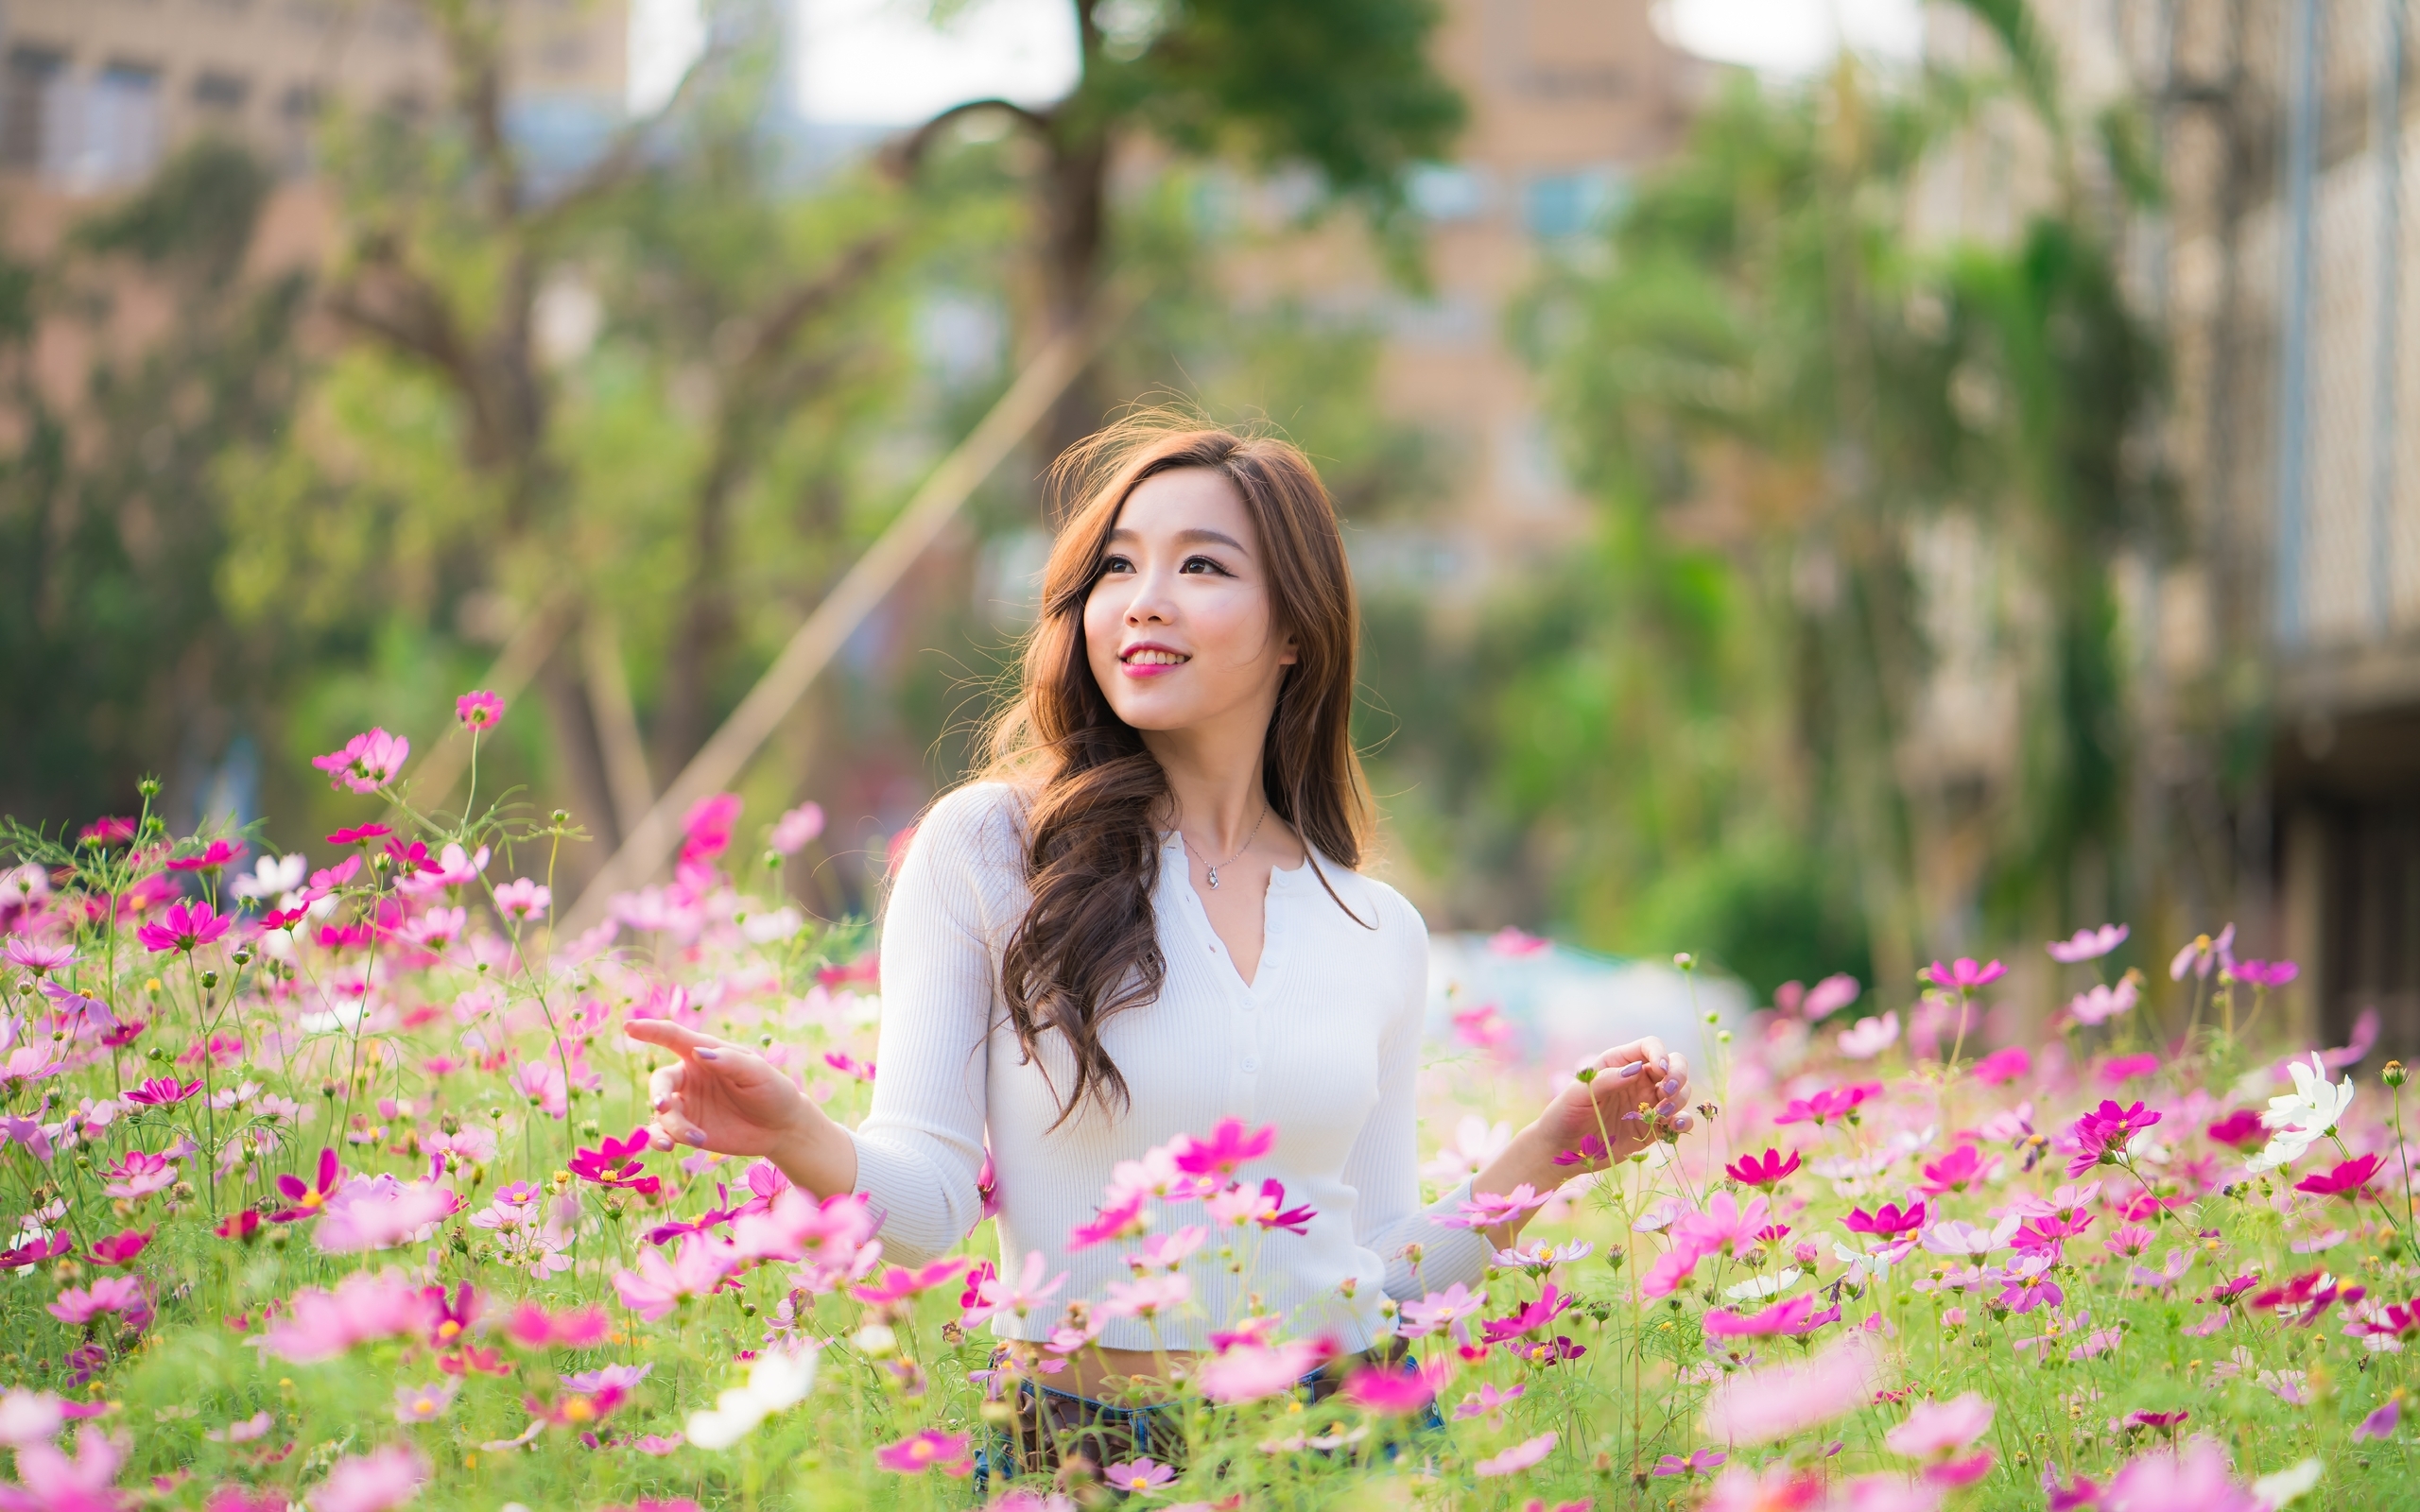 Image: Girl, smile, field, flowers, mood, summer